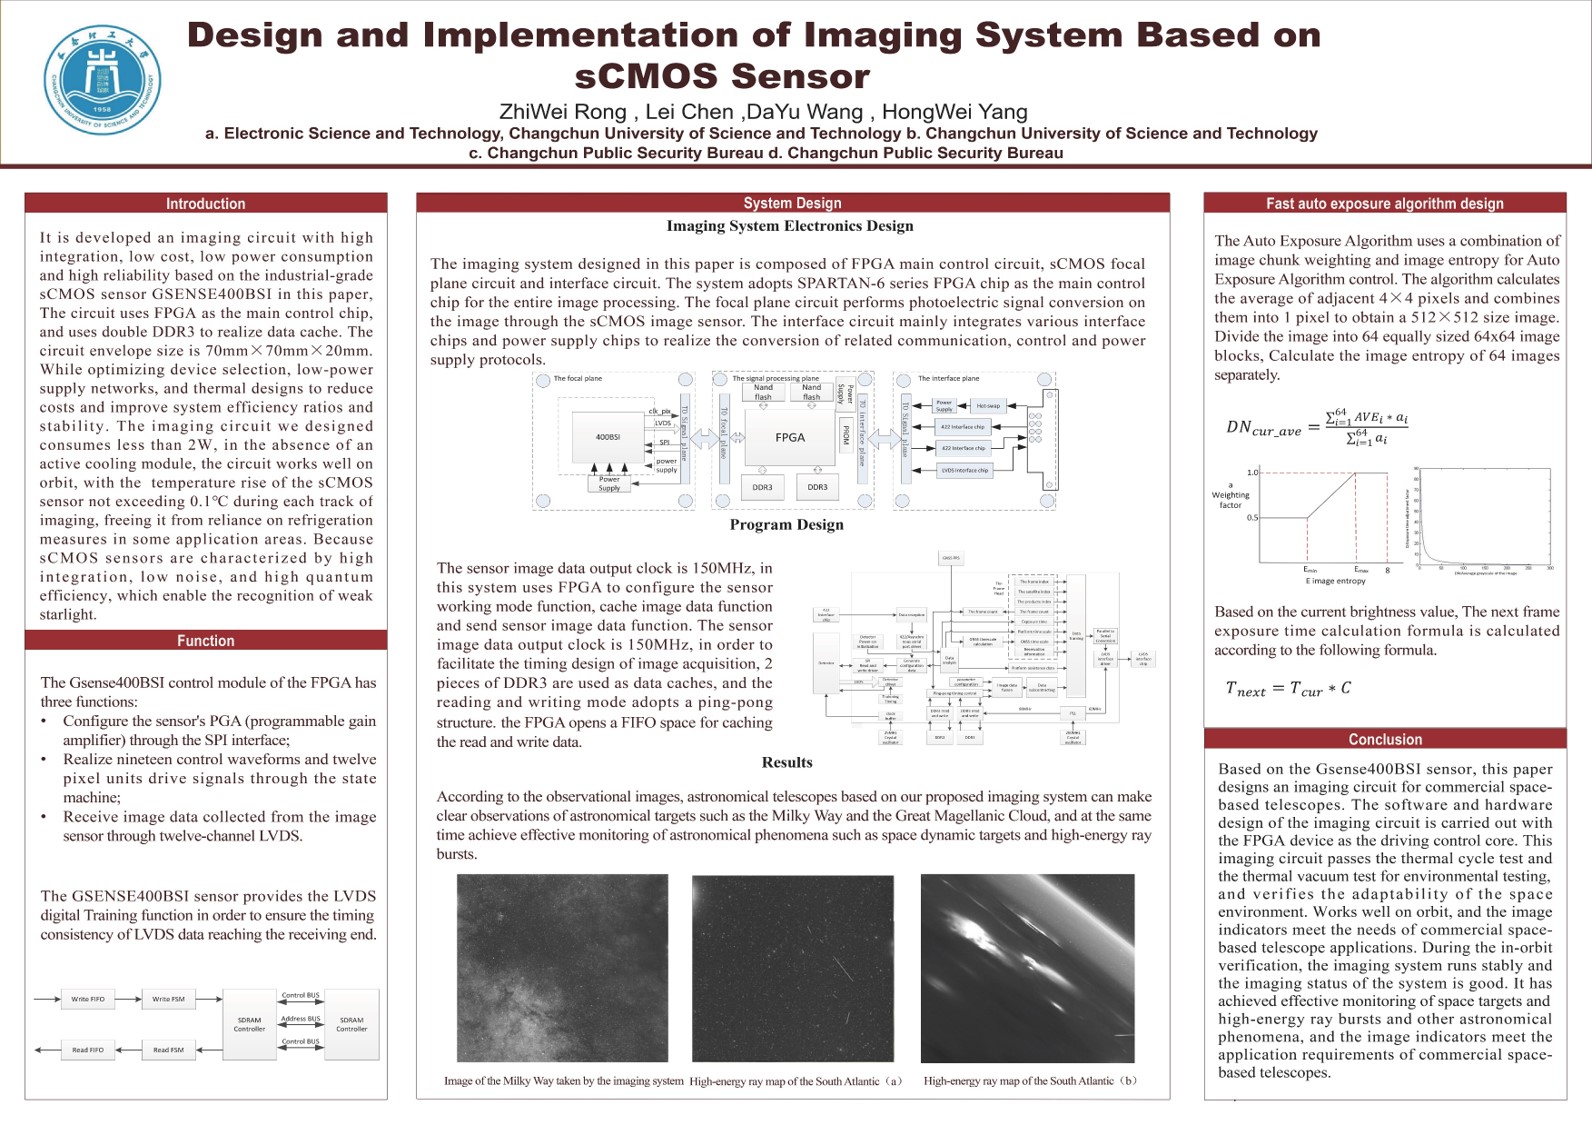 UERE3MNINL-Design and Implementation of Imaging System Based on sCMOS Sensor-poster.jpg